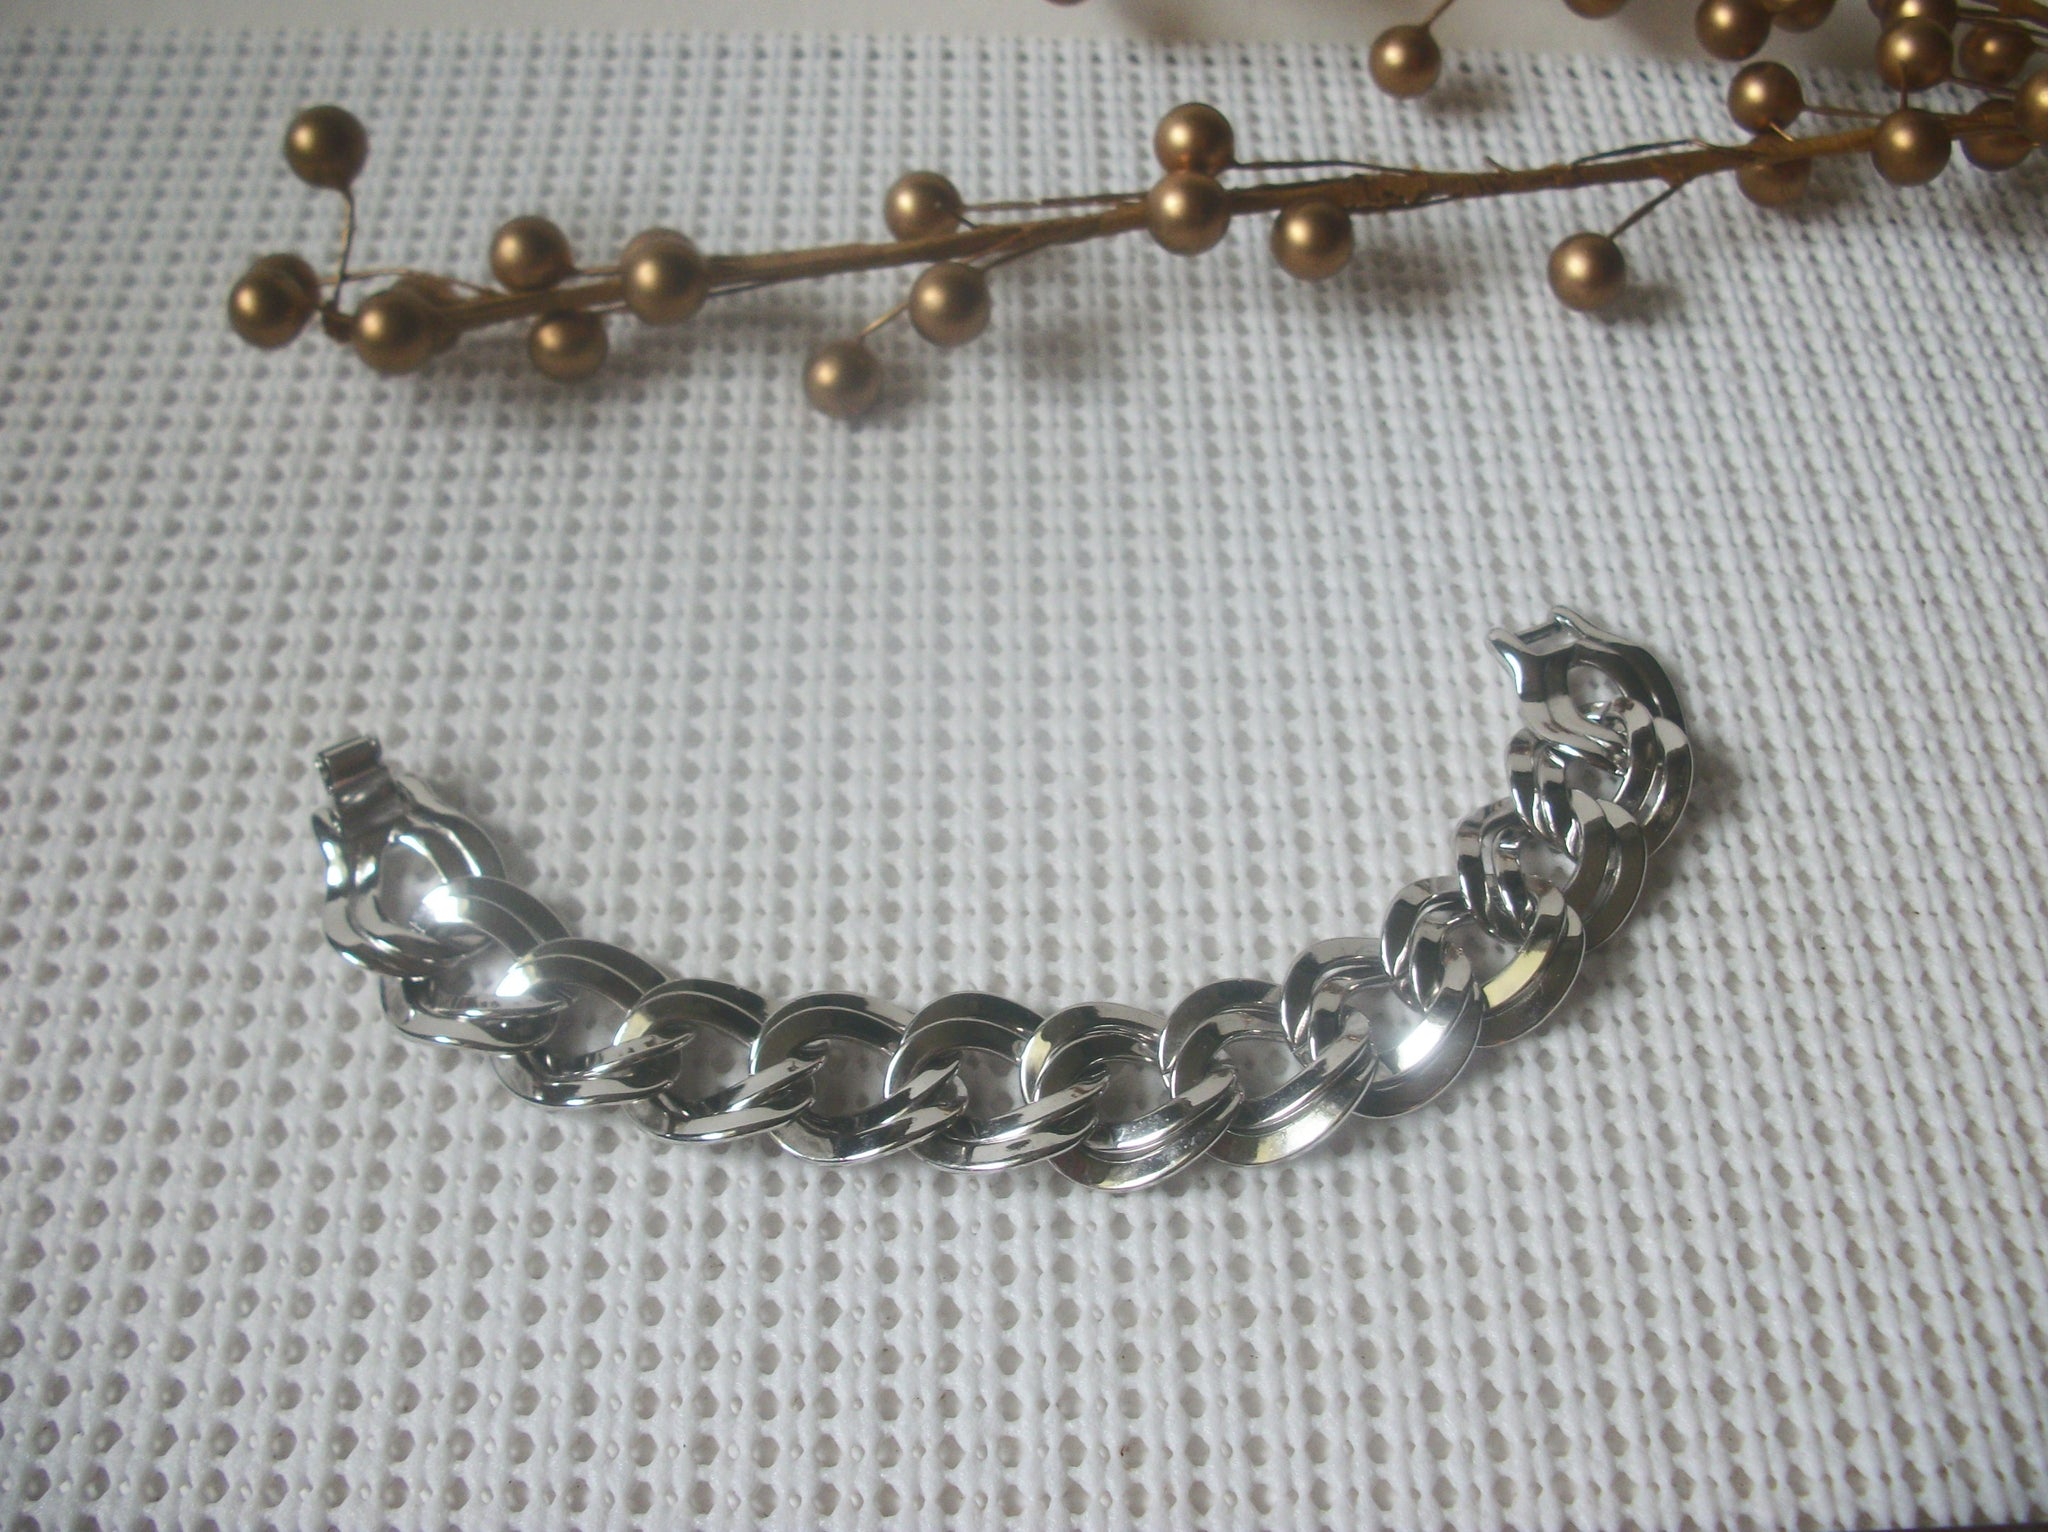 Vintage Bracelet, Signed MONET 7 1/2" Stainless Steel Silver Tone Wide Links 82317